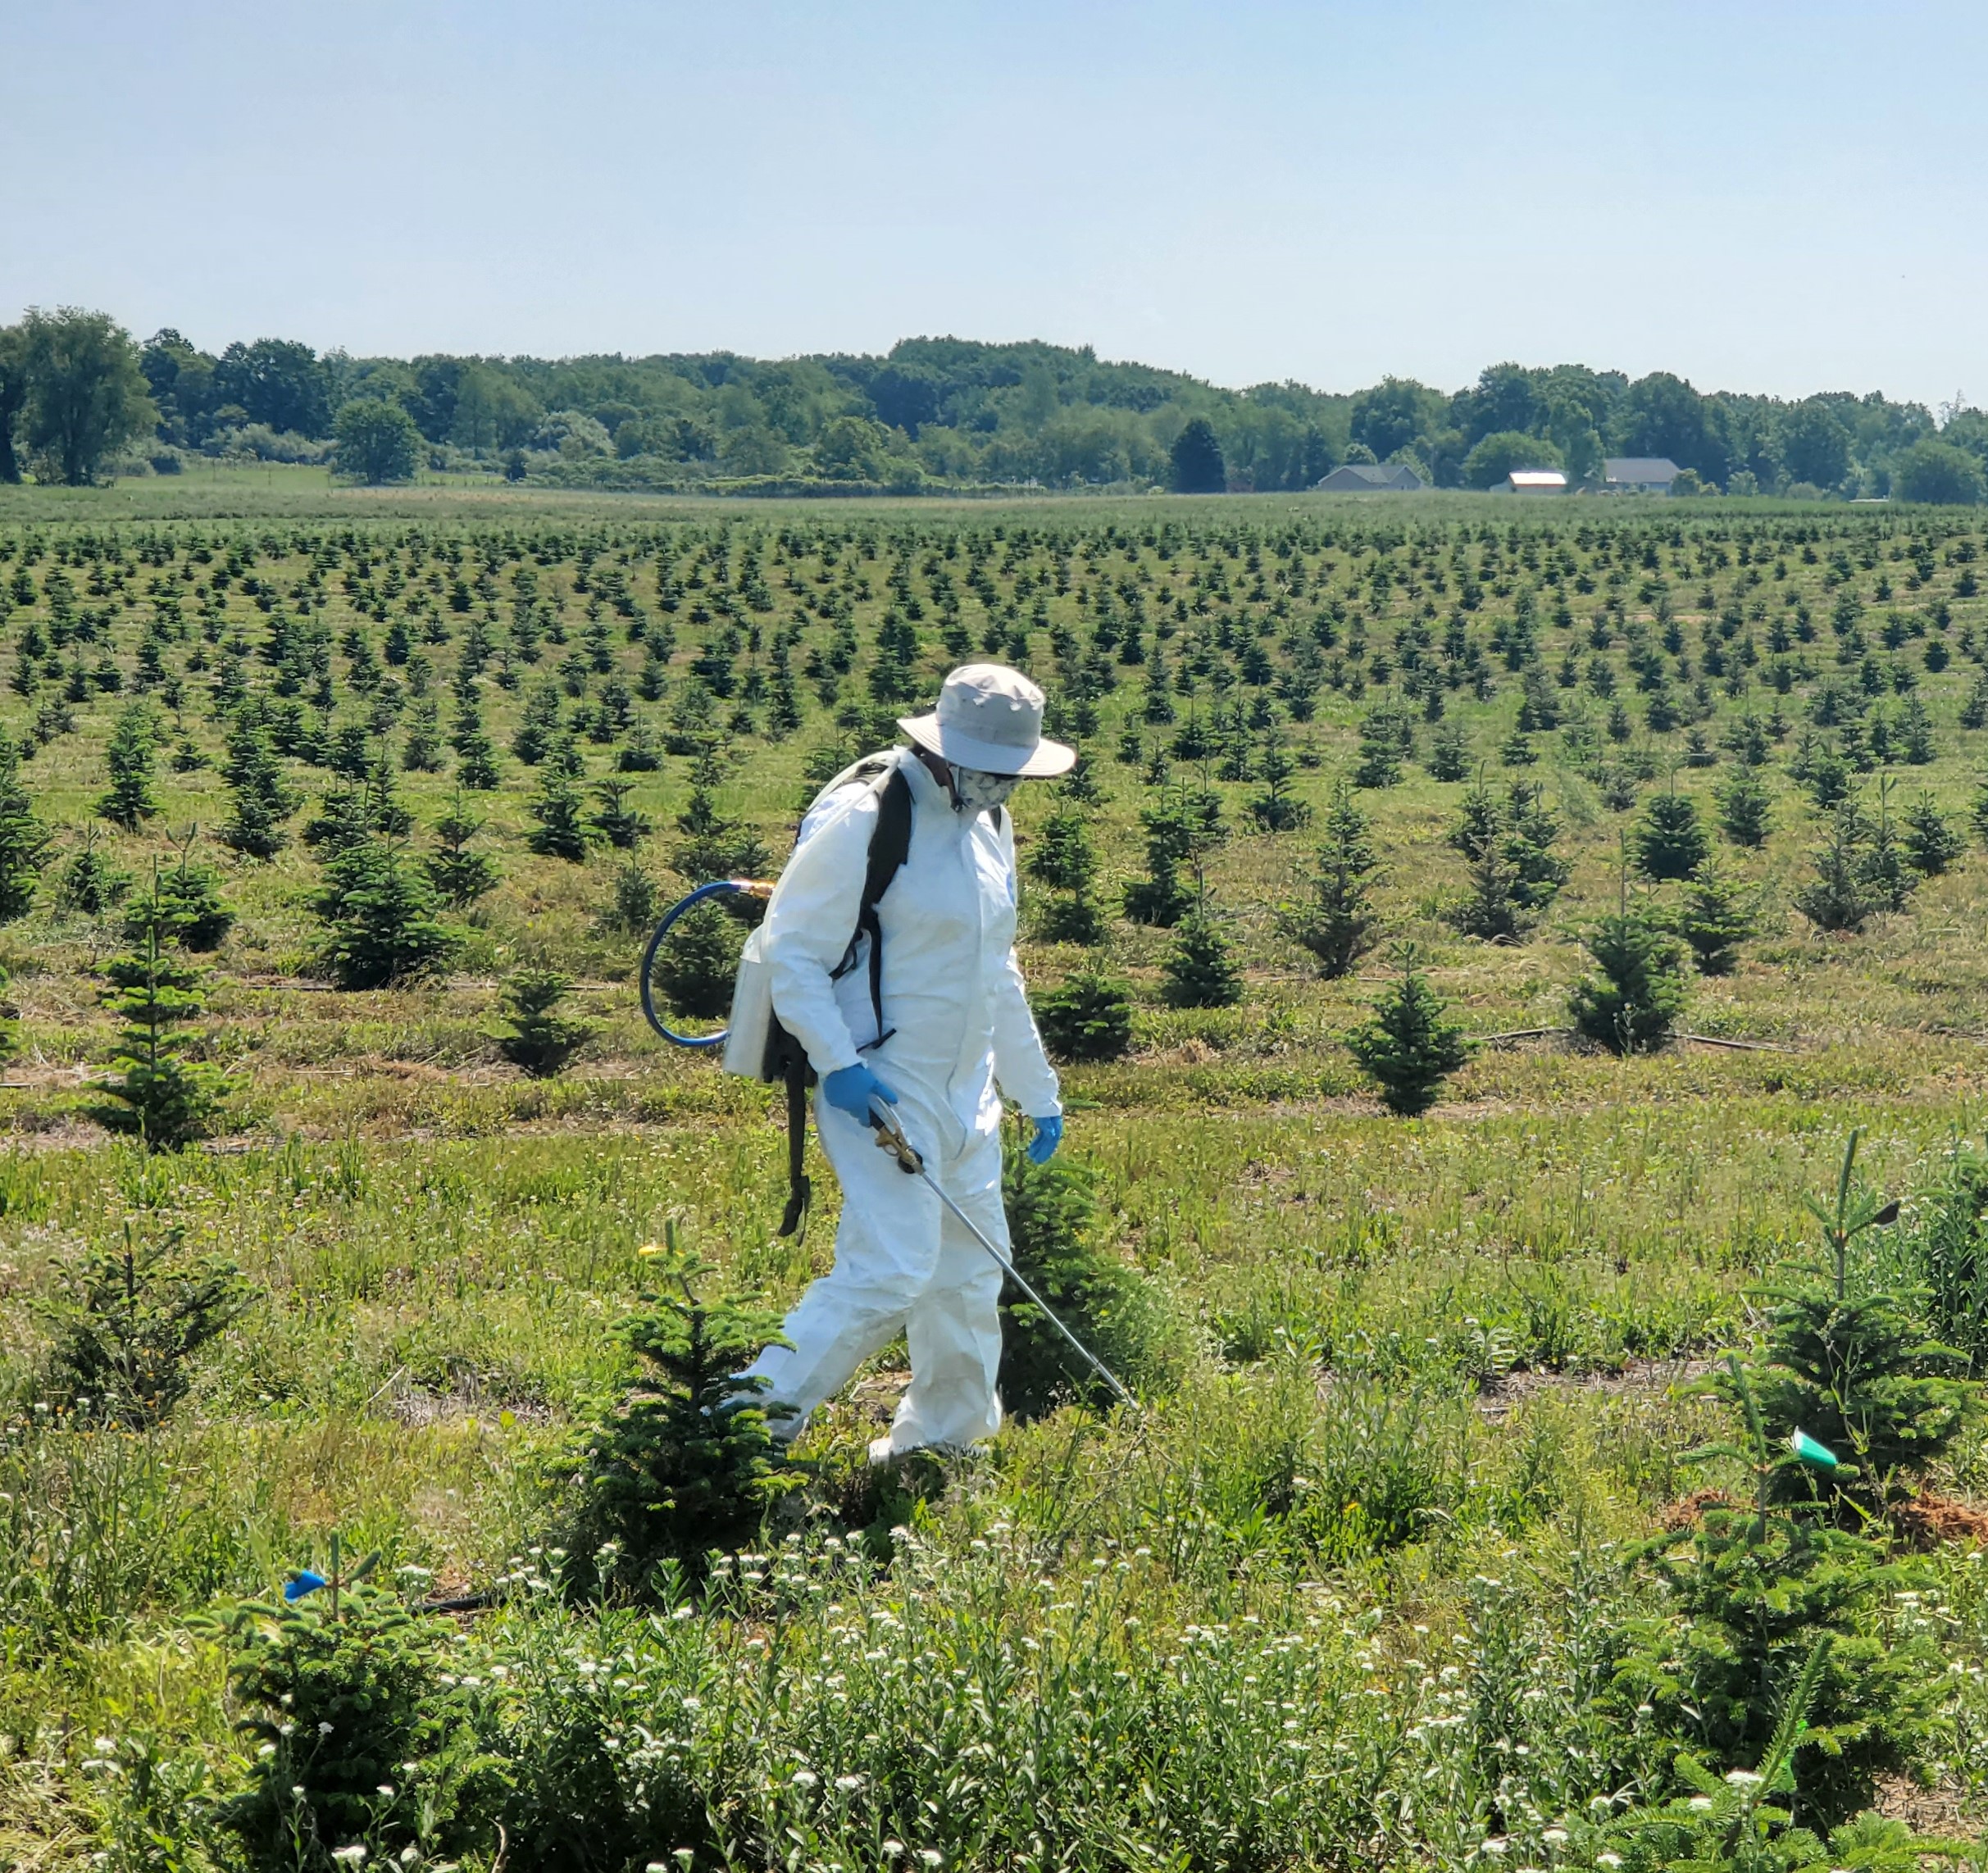 A man spraying herbicides on Christmas tree plantings.